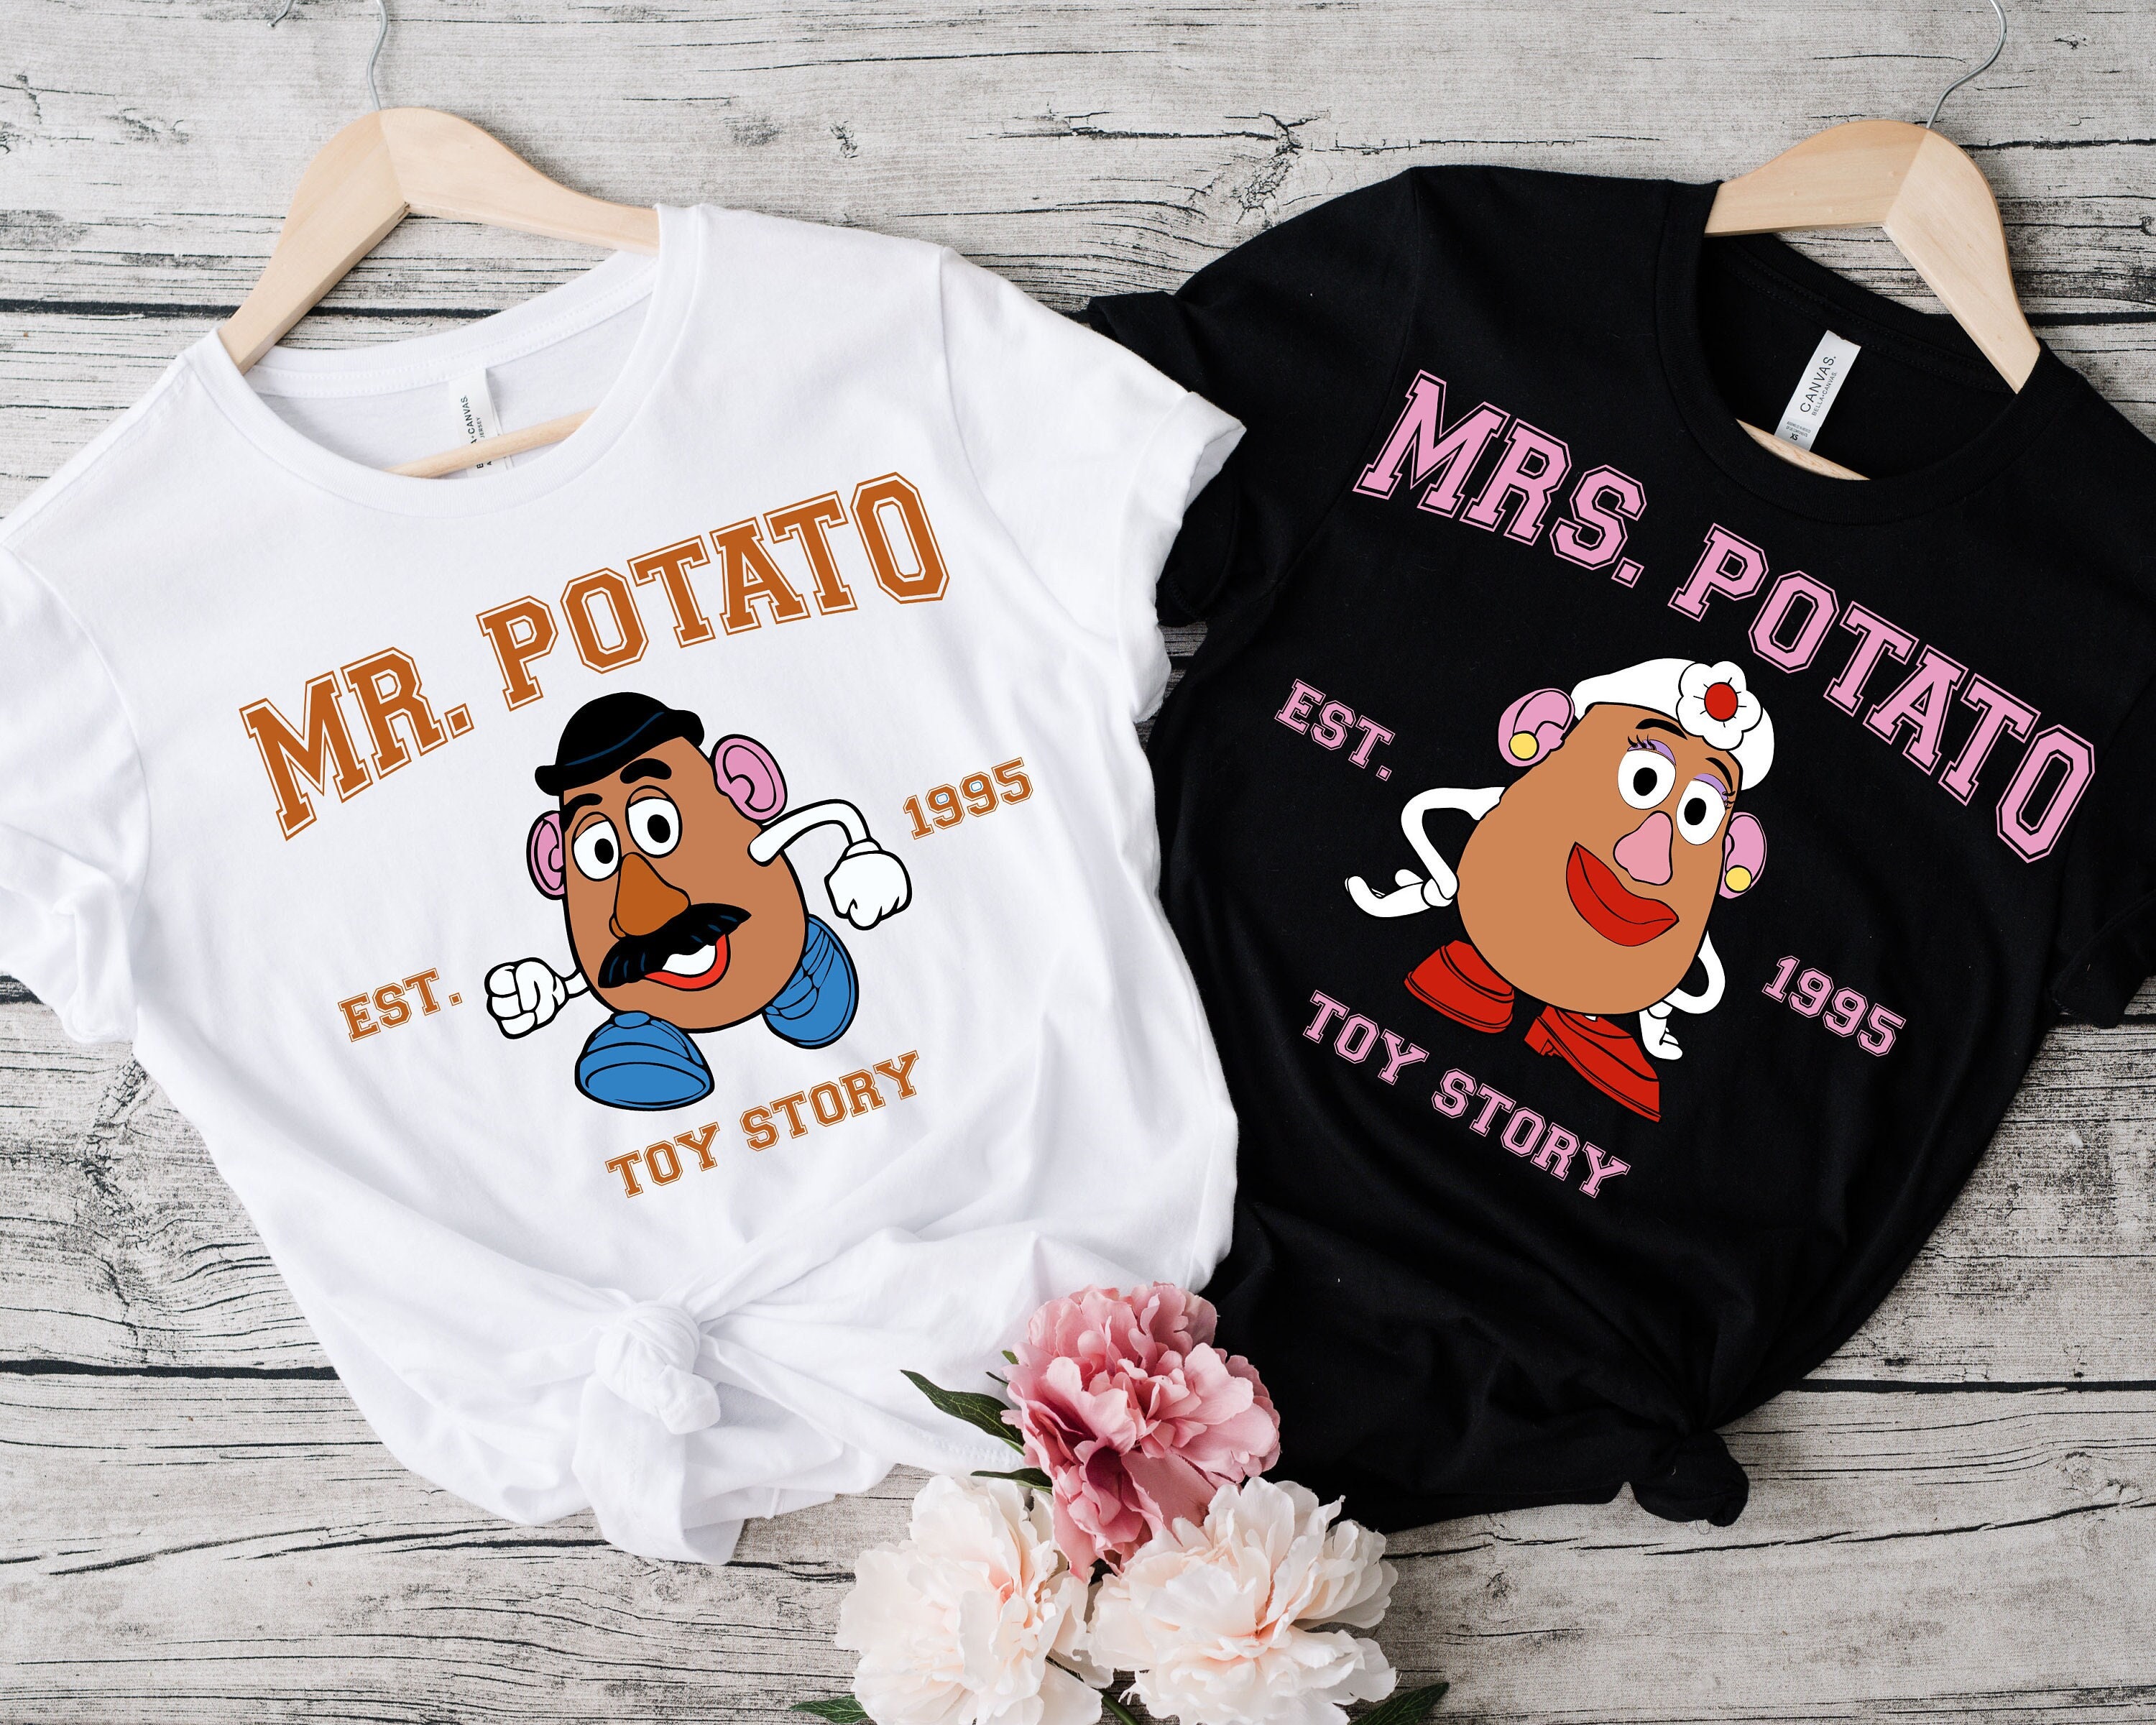 PATTERN ONLY 2 Patterns Mr. Potato Head and Mrs. Potato Head Felt Toy 